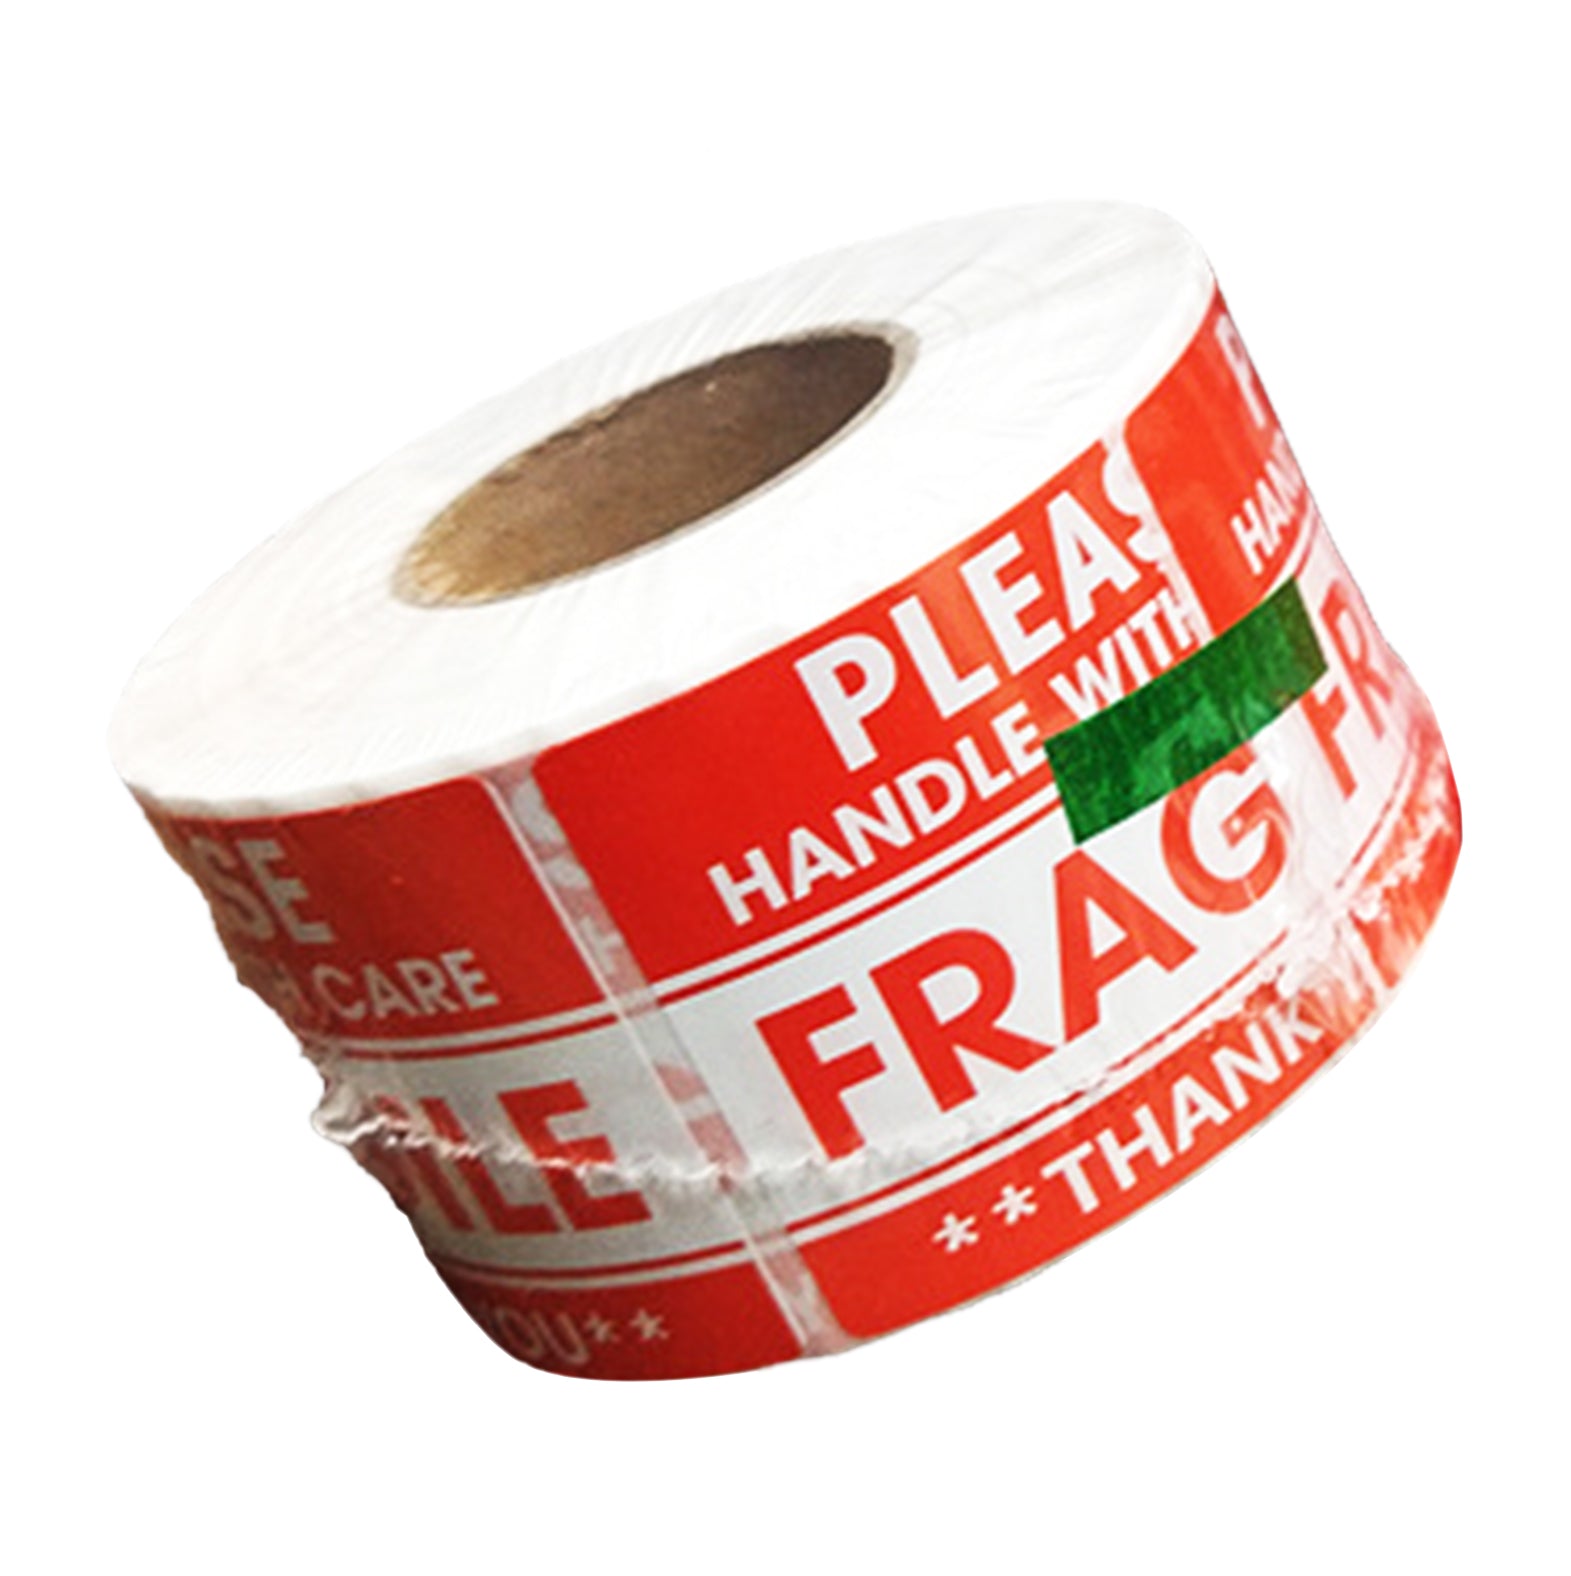 3.5"x6" Fragile/Upward Package Sticker - Reel - 500 Packs-Flag Menu